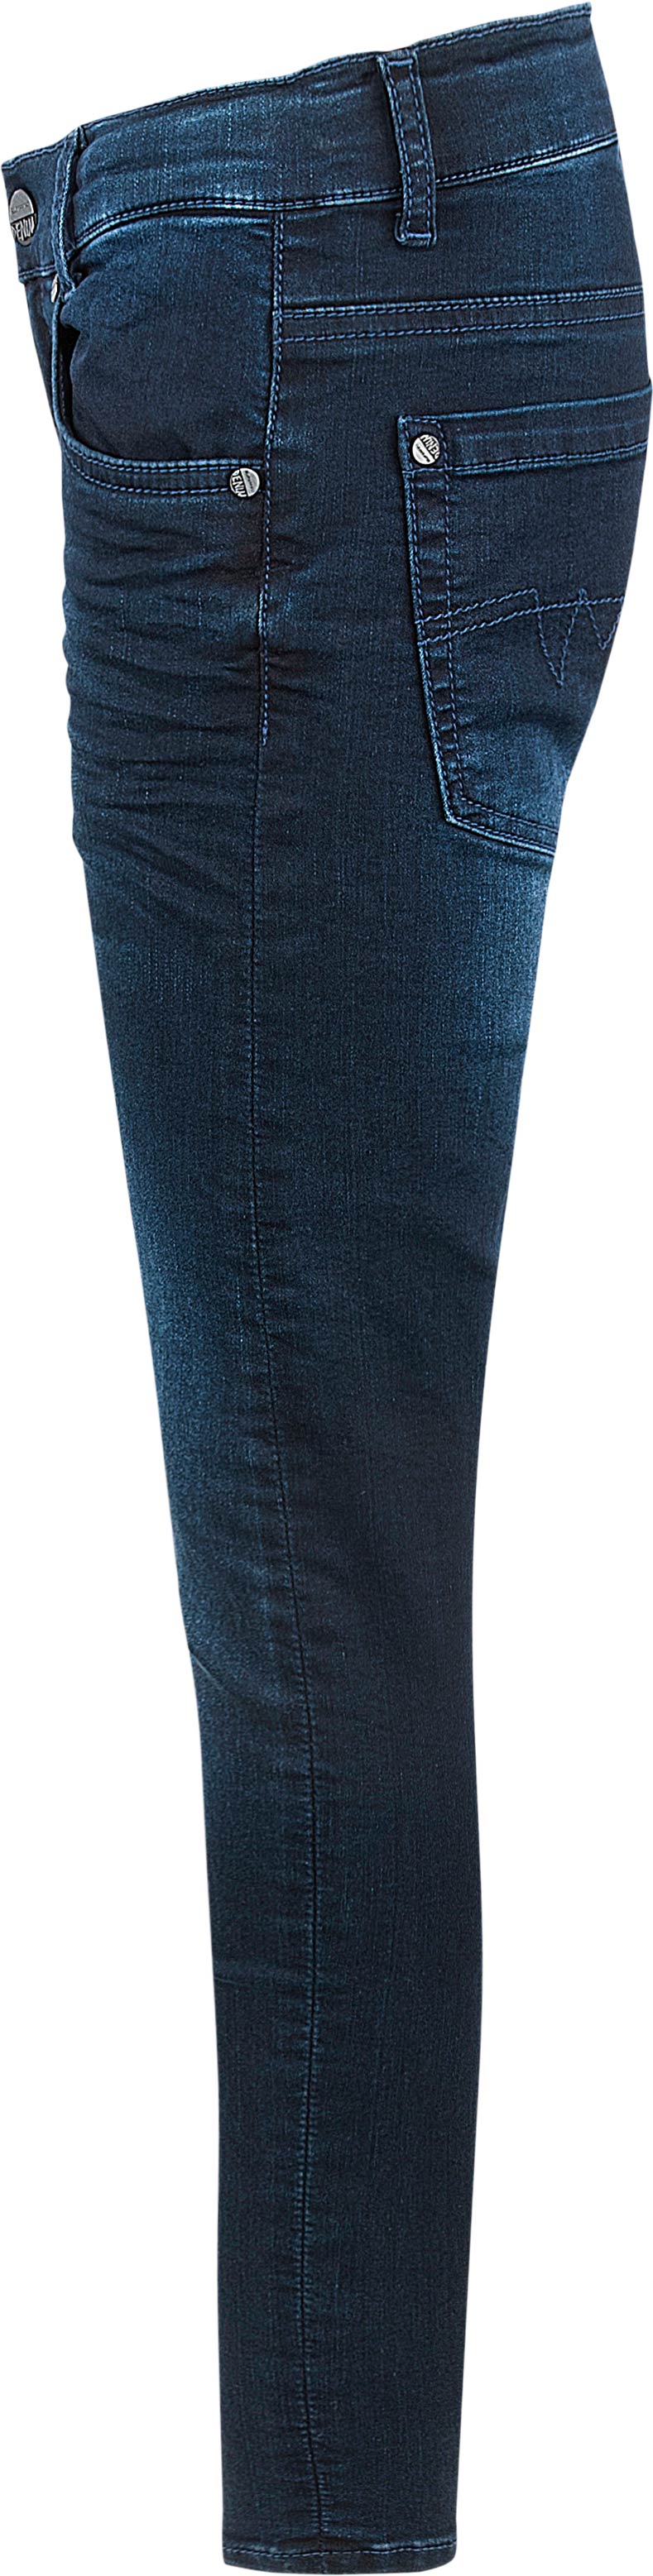 2725-NOS Boys Jeans Super-Slim, Ultrastretch